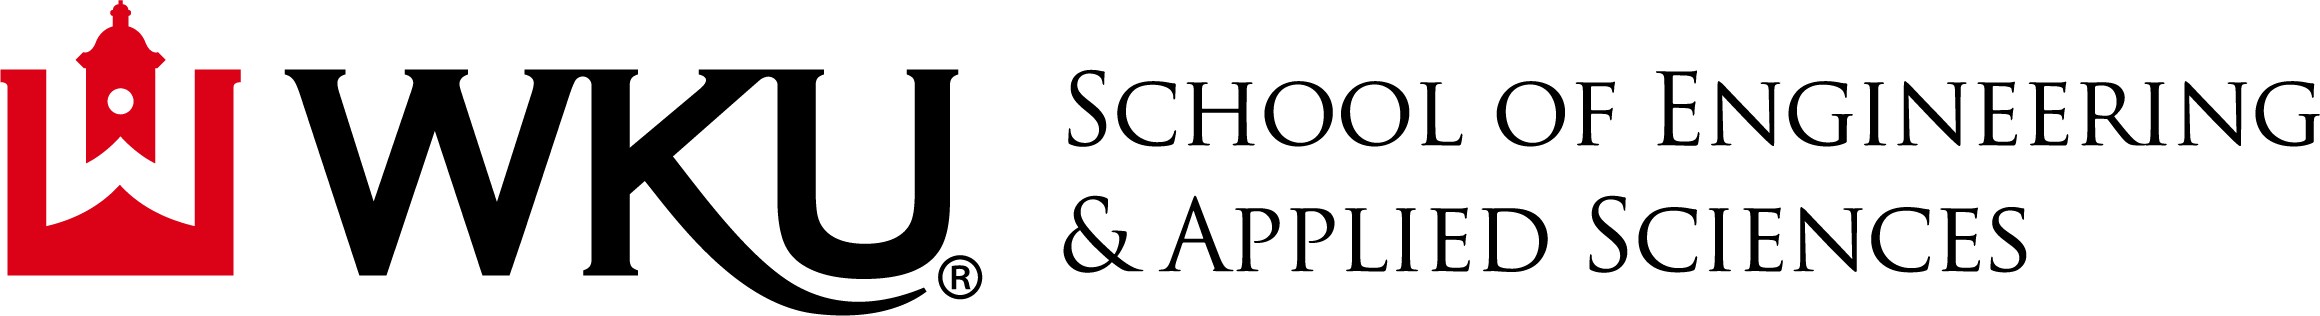 Western Kentucky University School of Engineering and Applied Sciences Logo